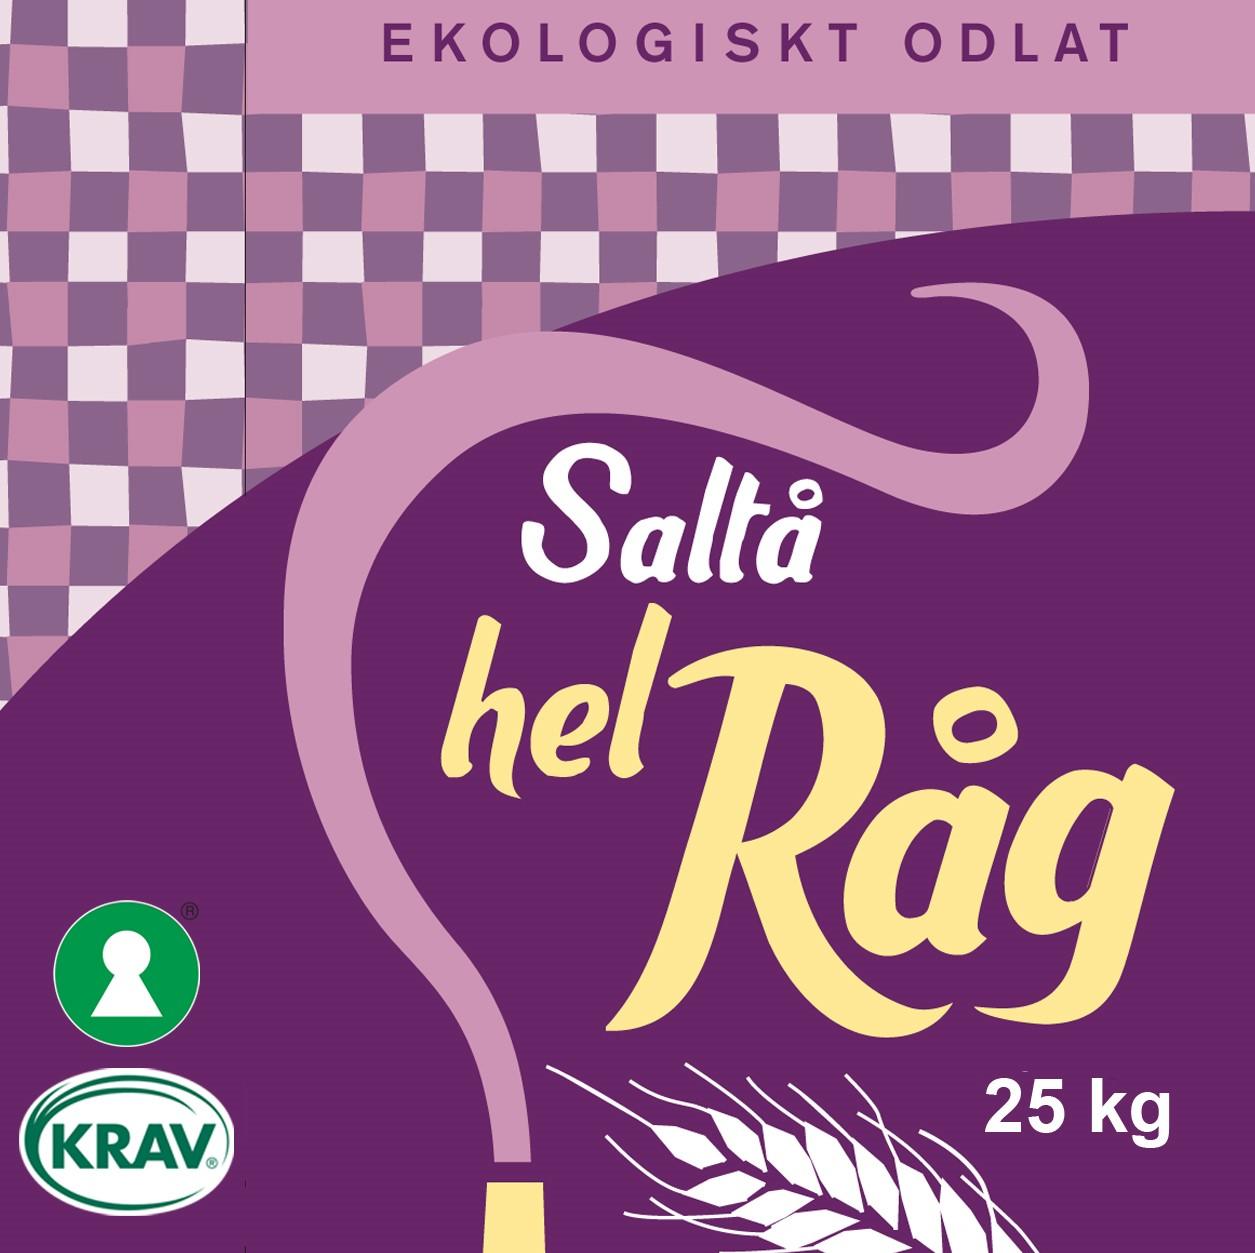 Saltå Kvarn's Whole rye '